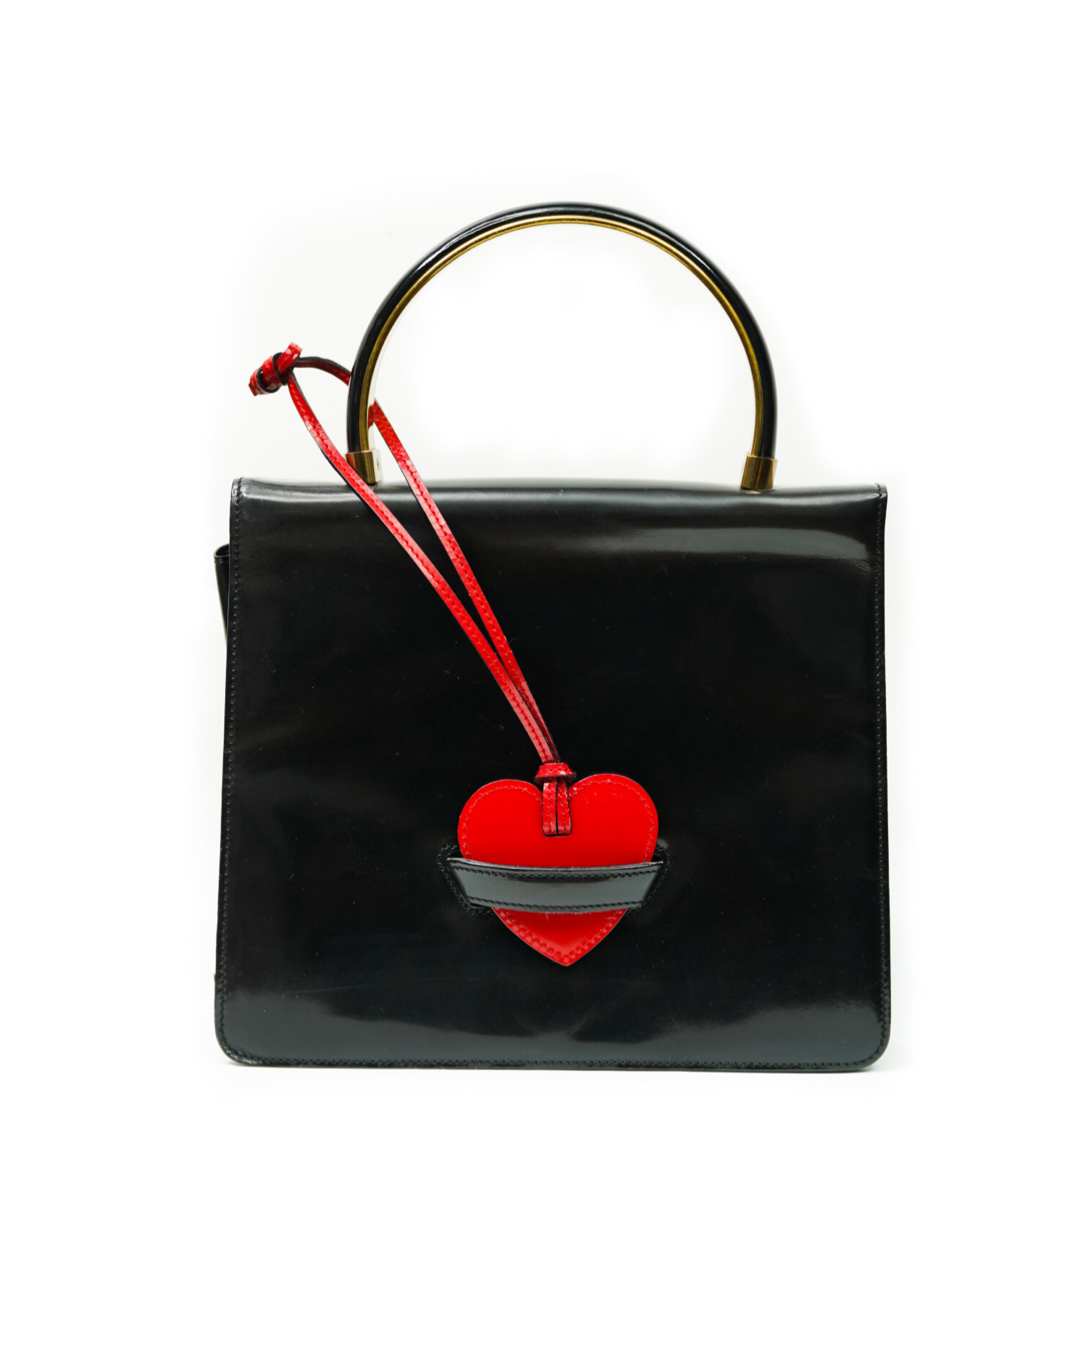 RARE! Vintage Moschino Black Heart Bag 1995